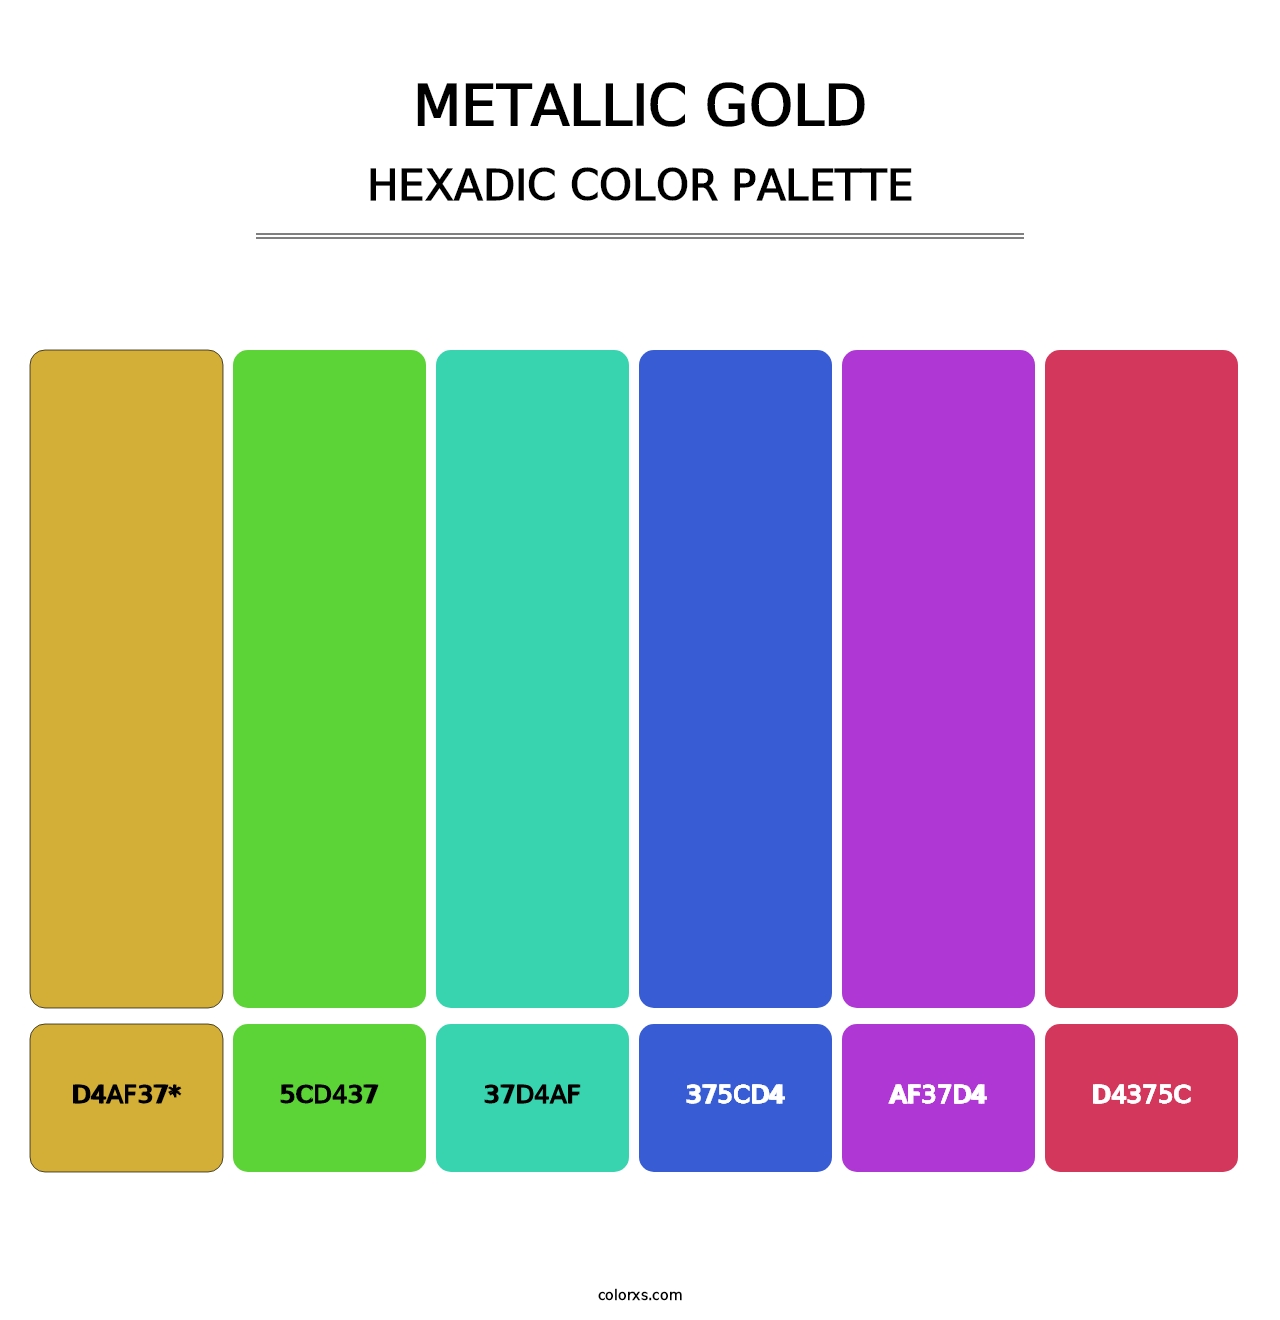 Metallic Gold - Hexadic Color Palette